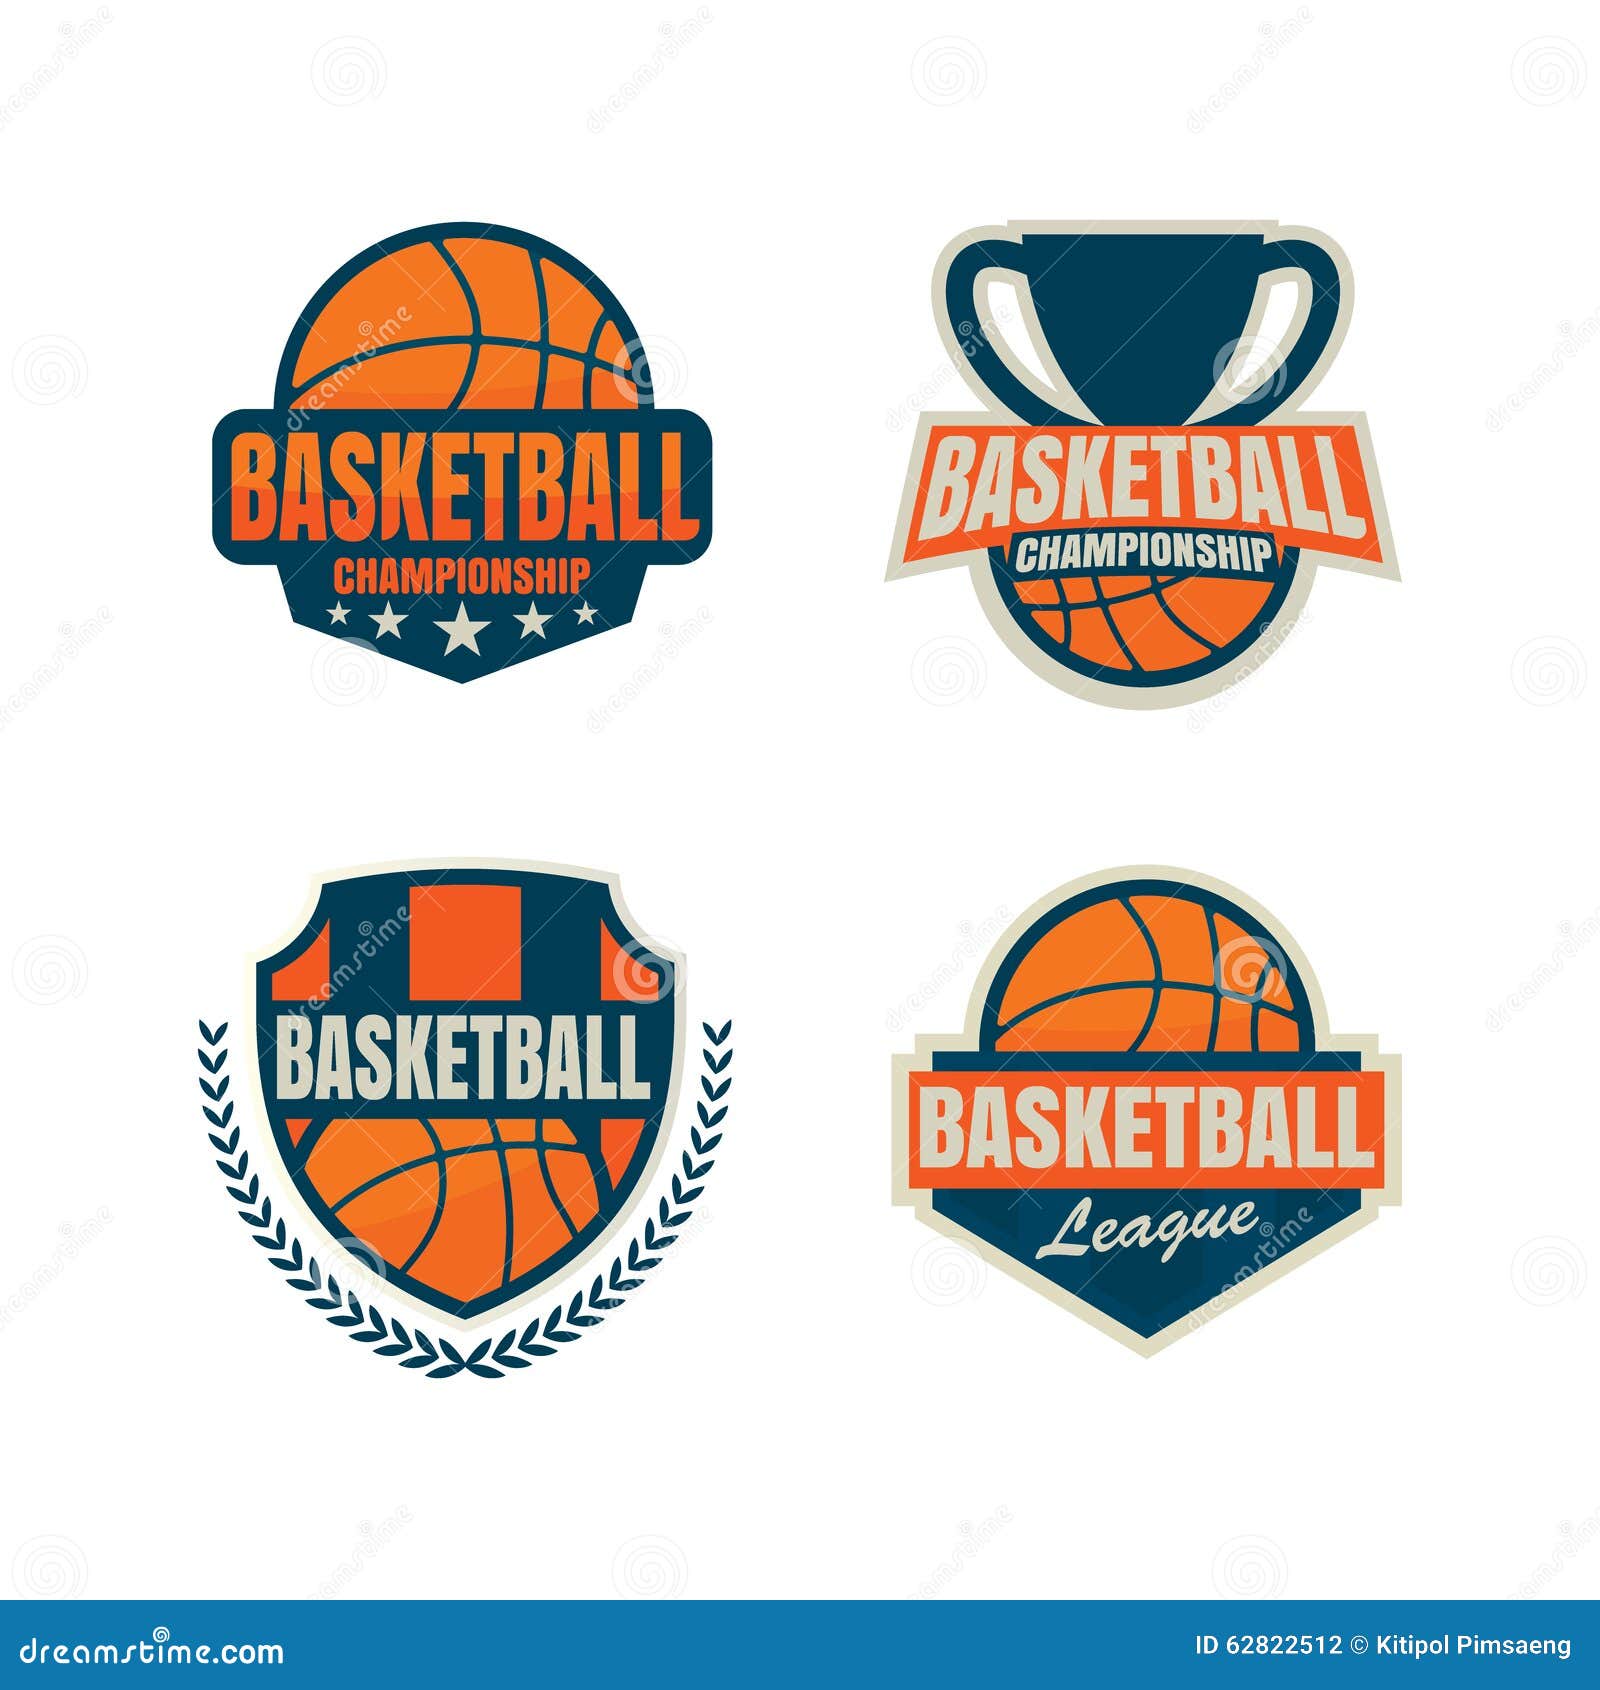 Basketball Logo Template Stock Vector - Image: 62822512